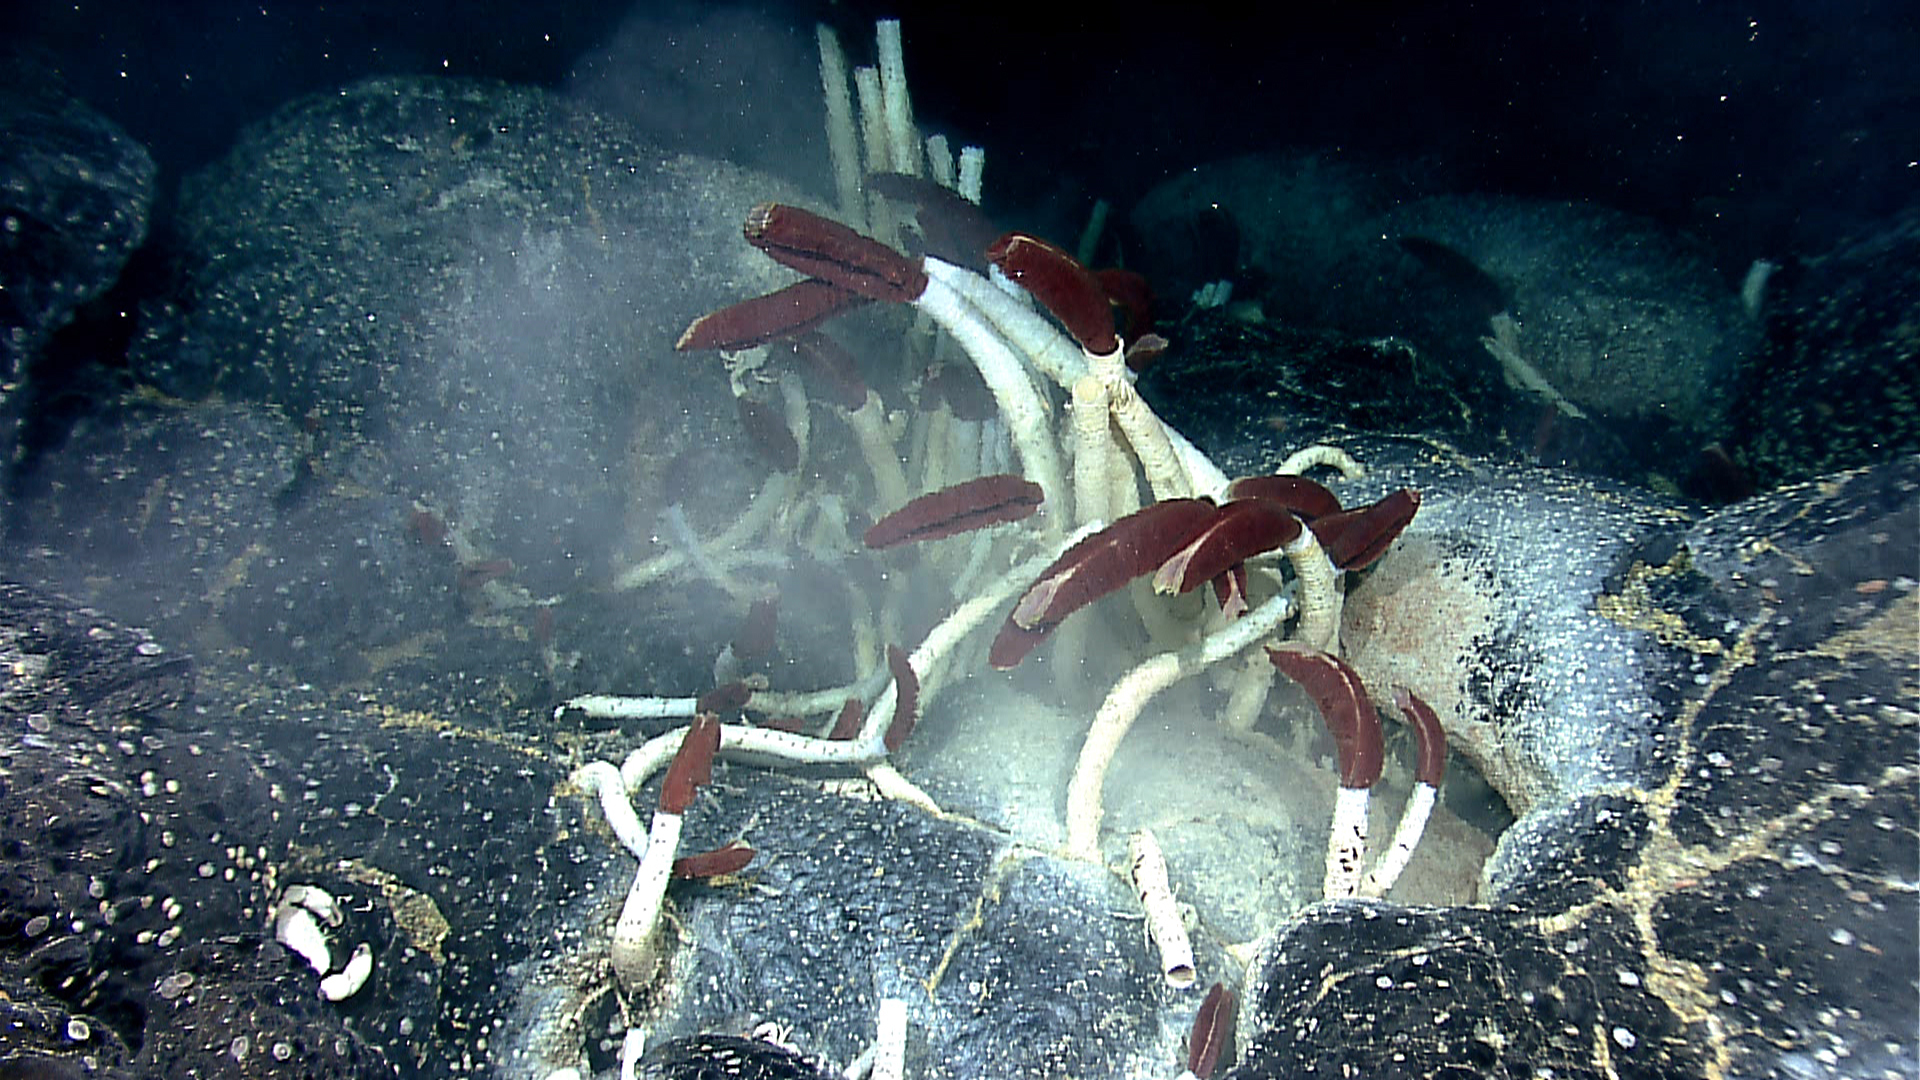 A Riftia tubeworm colony observed off the coast of the Galapagos Islands